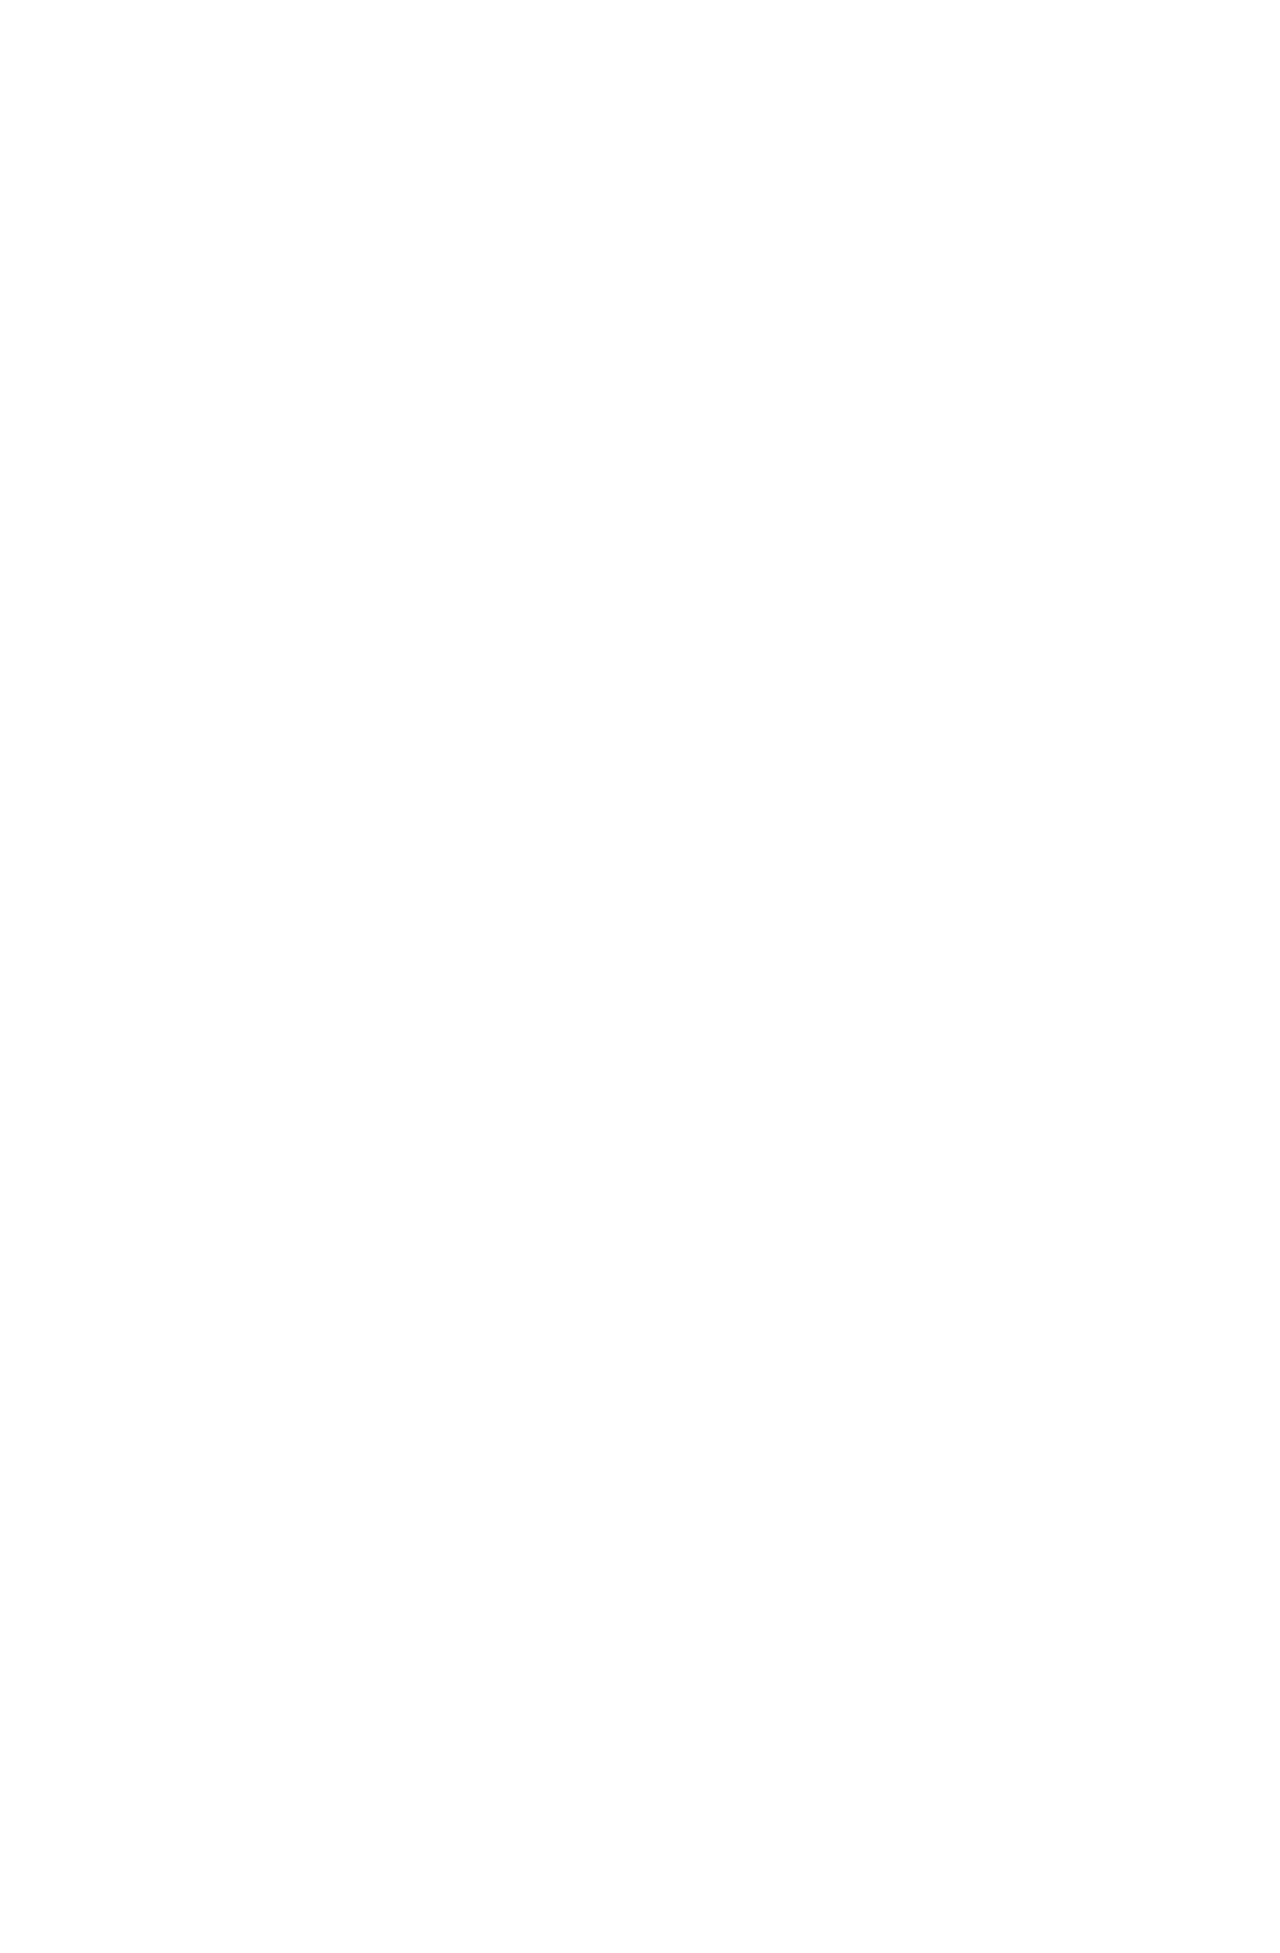 A.T.T's logo